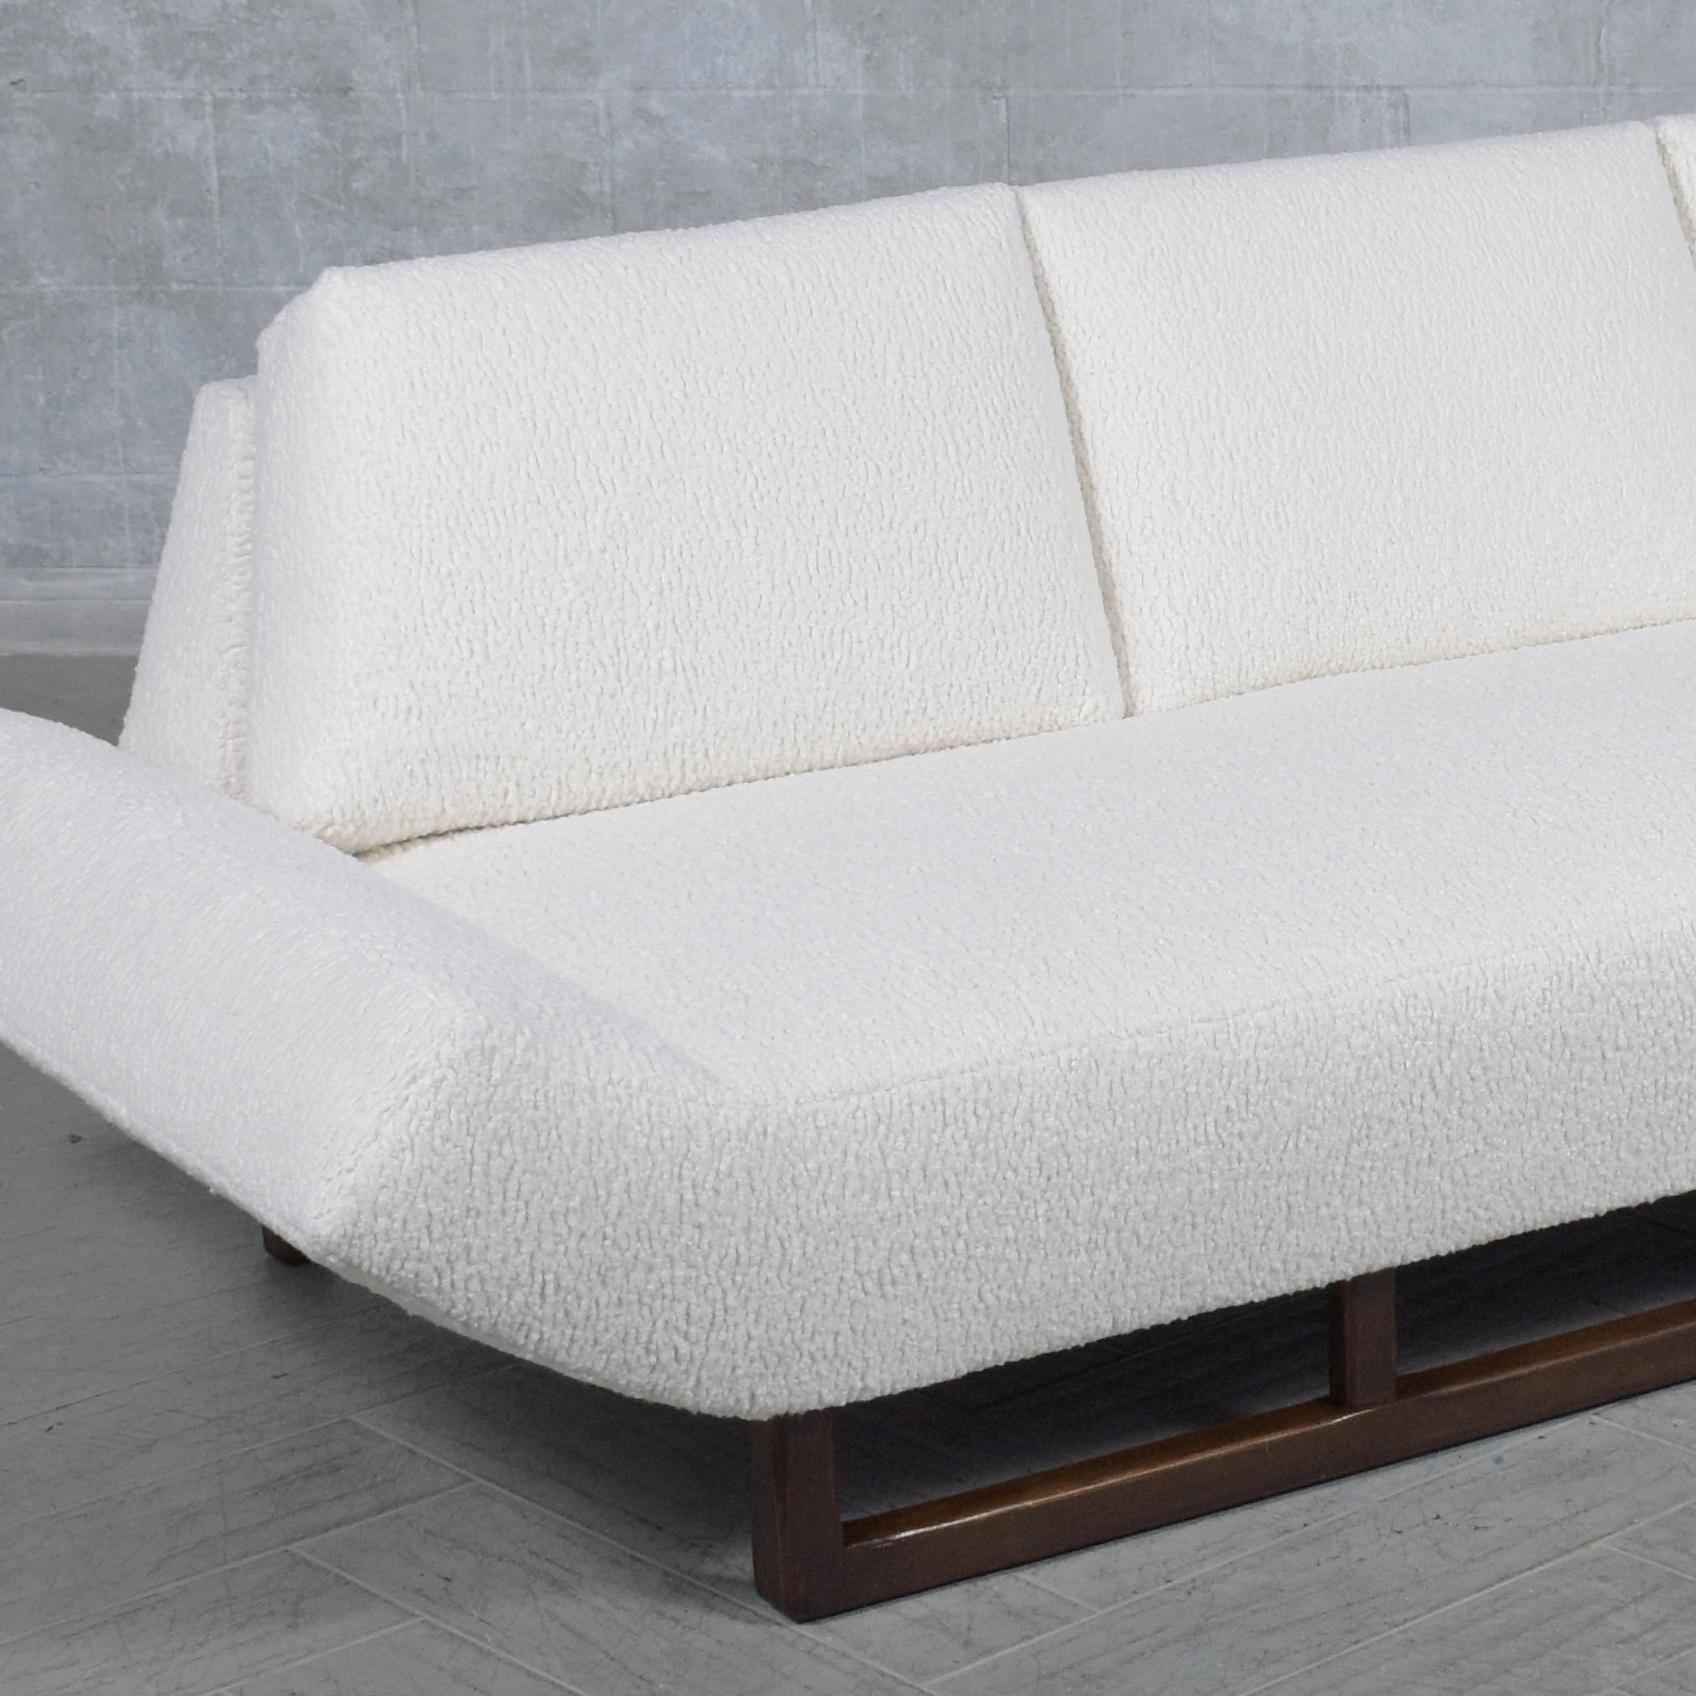 Vintage Mid-Century Sofa Restored: Classic Design Meets Modern Comfort 3